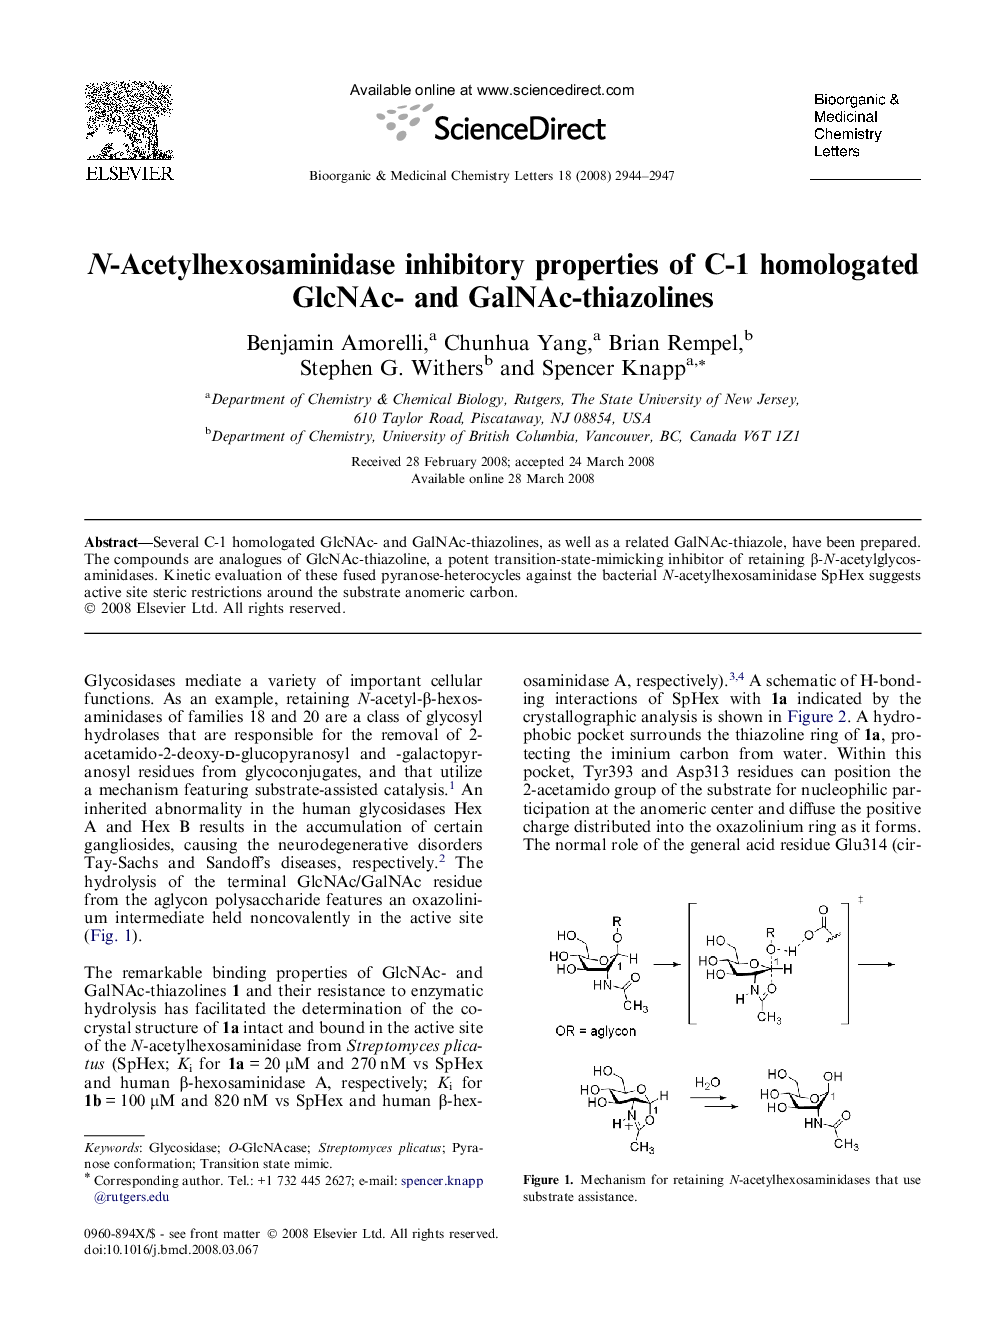 N-Acetylhexosaminidase inhibitory properties of C-1 homologated GlcNAc- and GalNAc-thiazolines